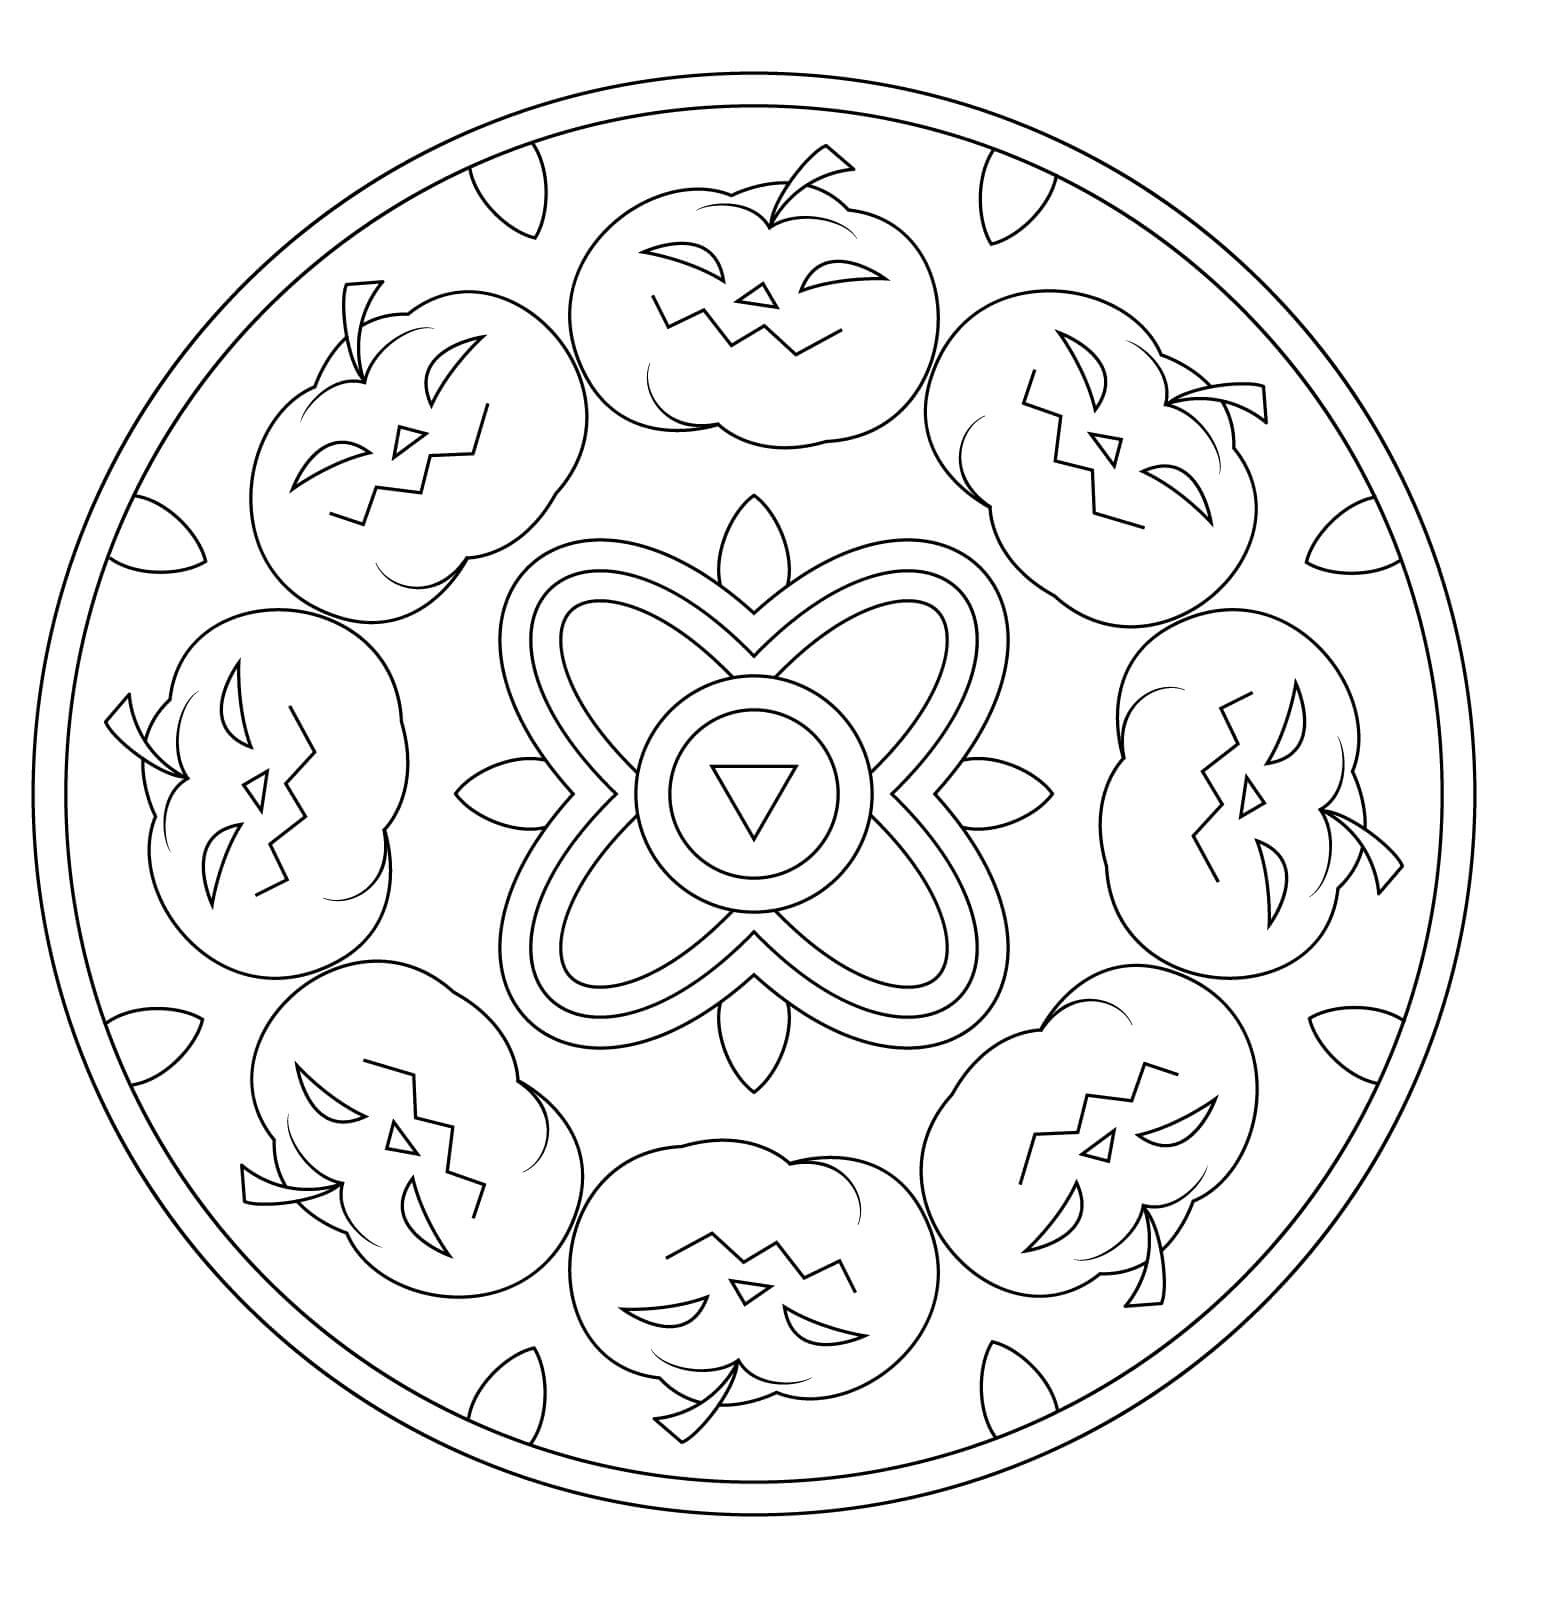 Mandala Halloween Coloring Page - Sheet 7 Mandalas